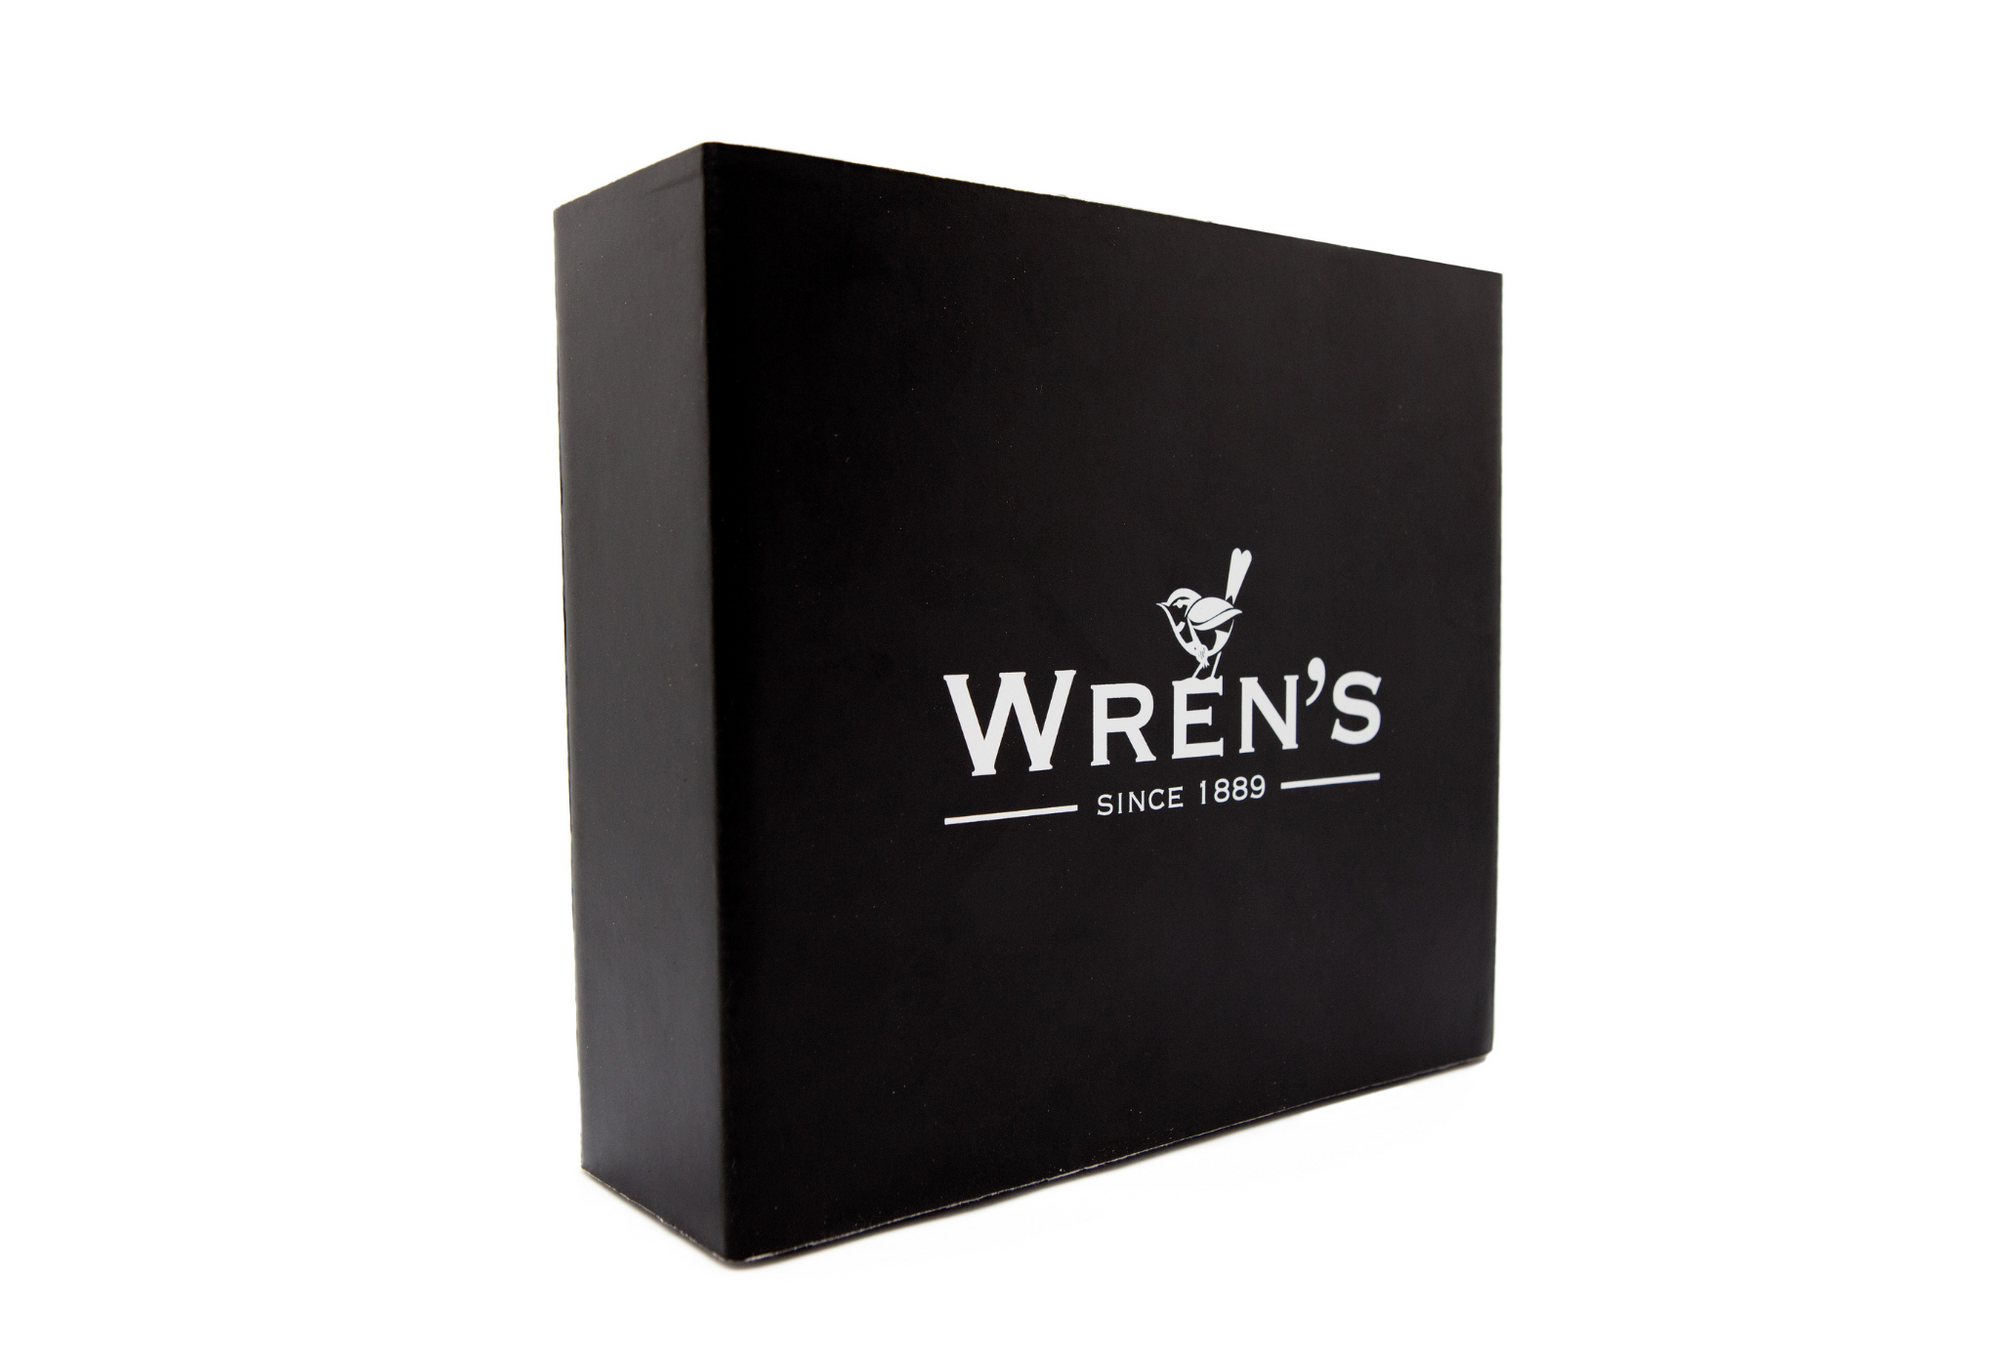 Wren's Leather Essential Kit